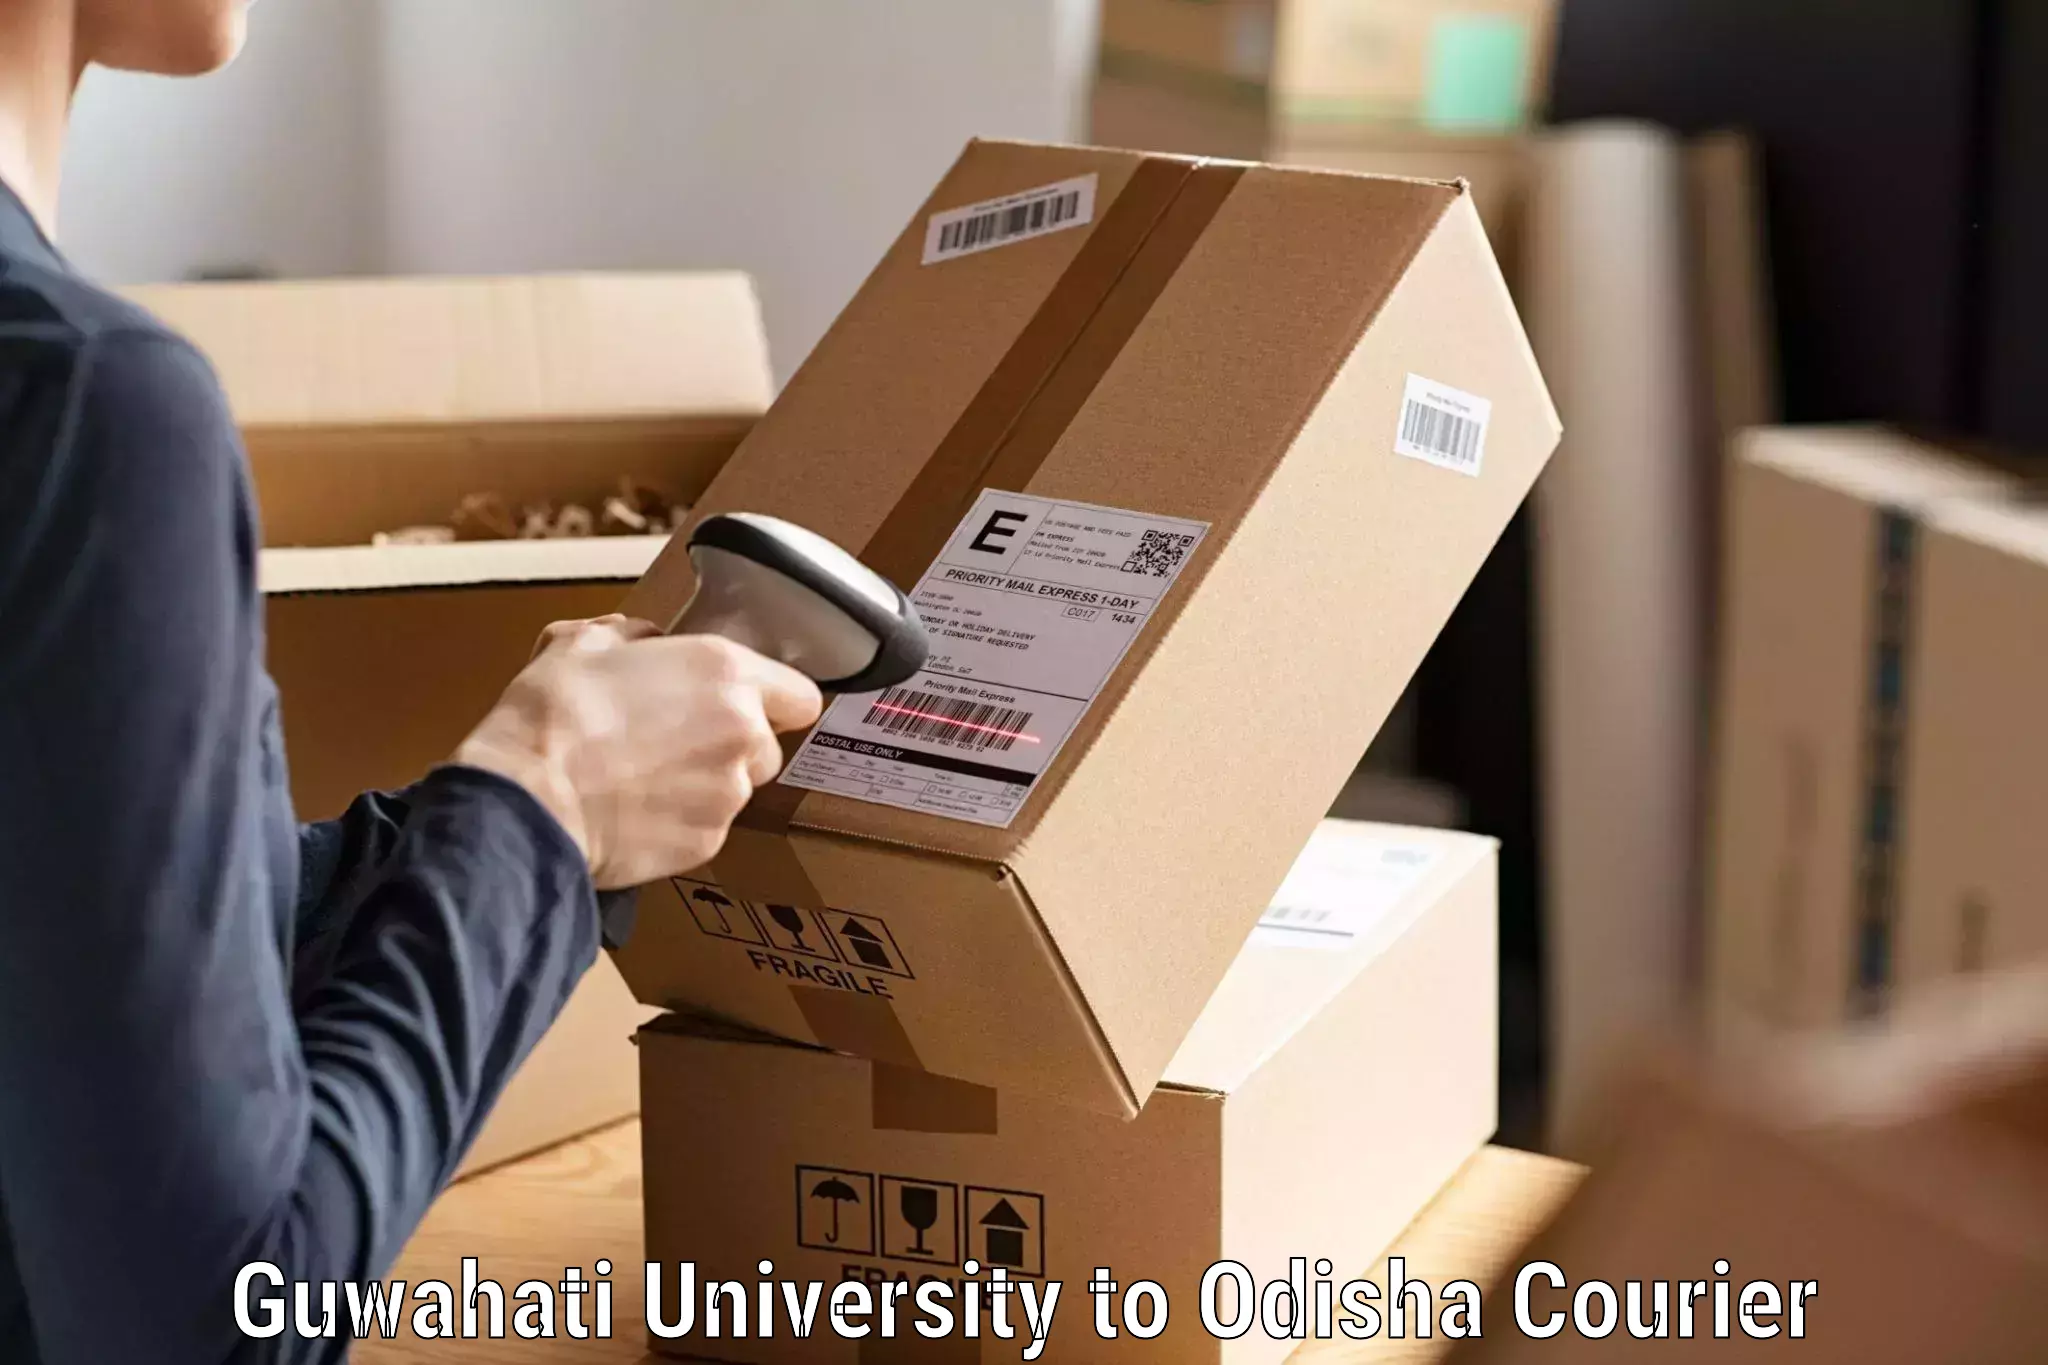 Courier service efficiency Guwahati University to Kandhamal